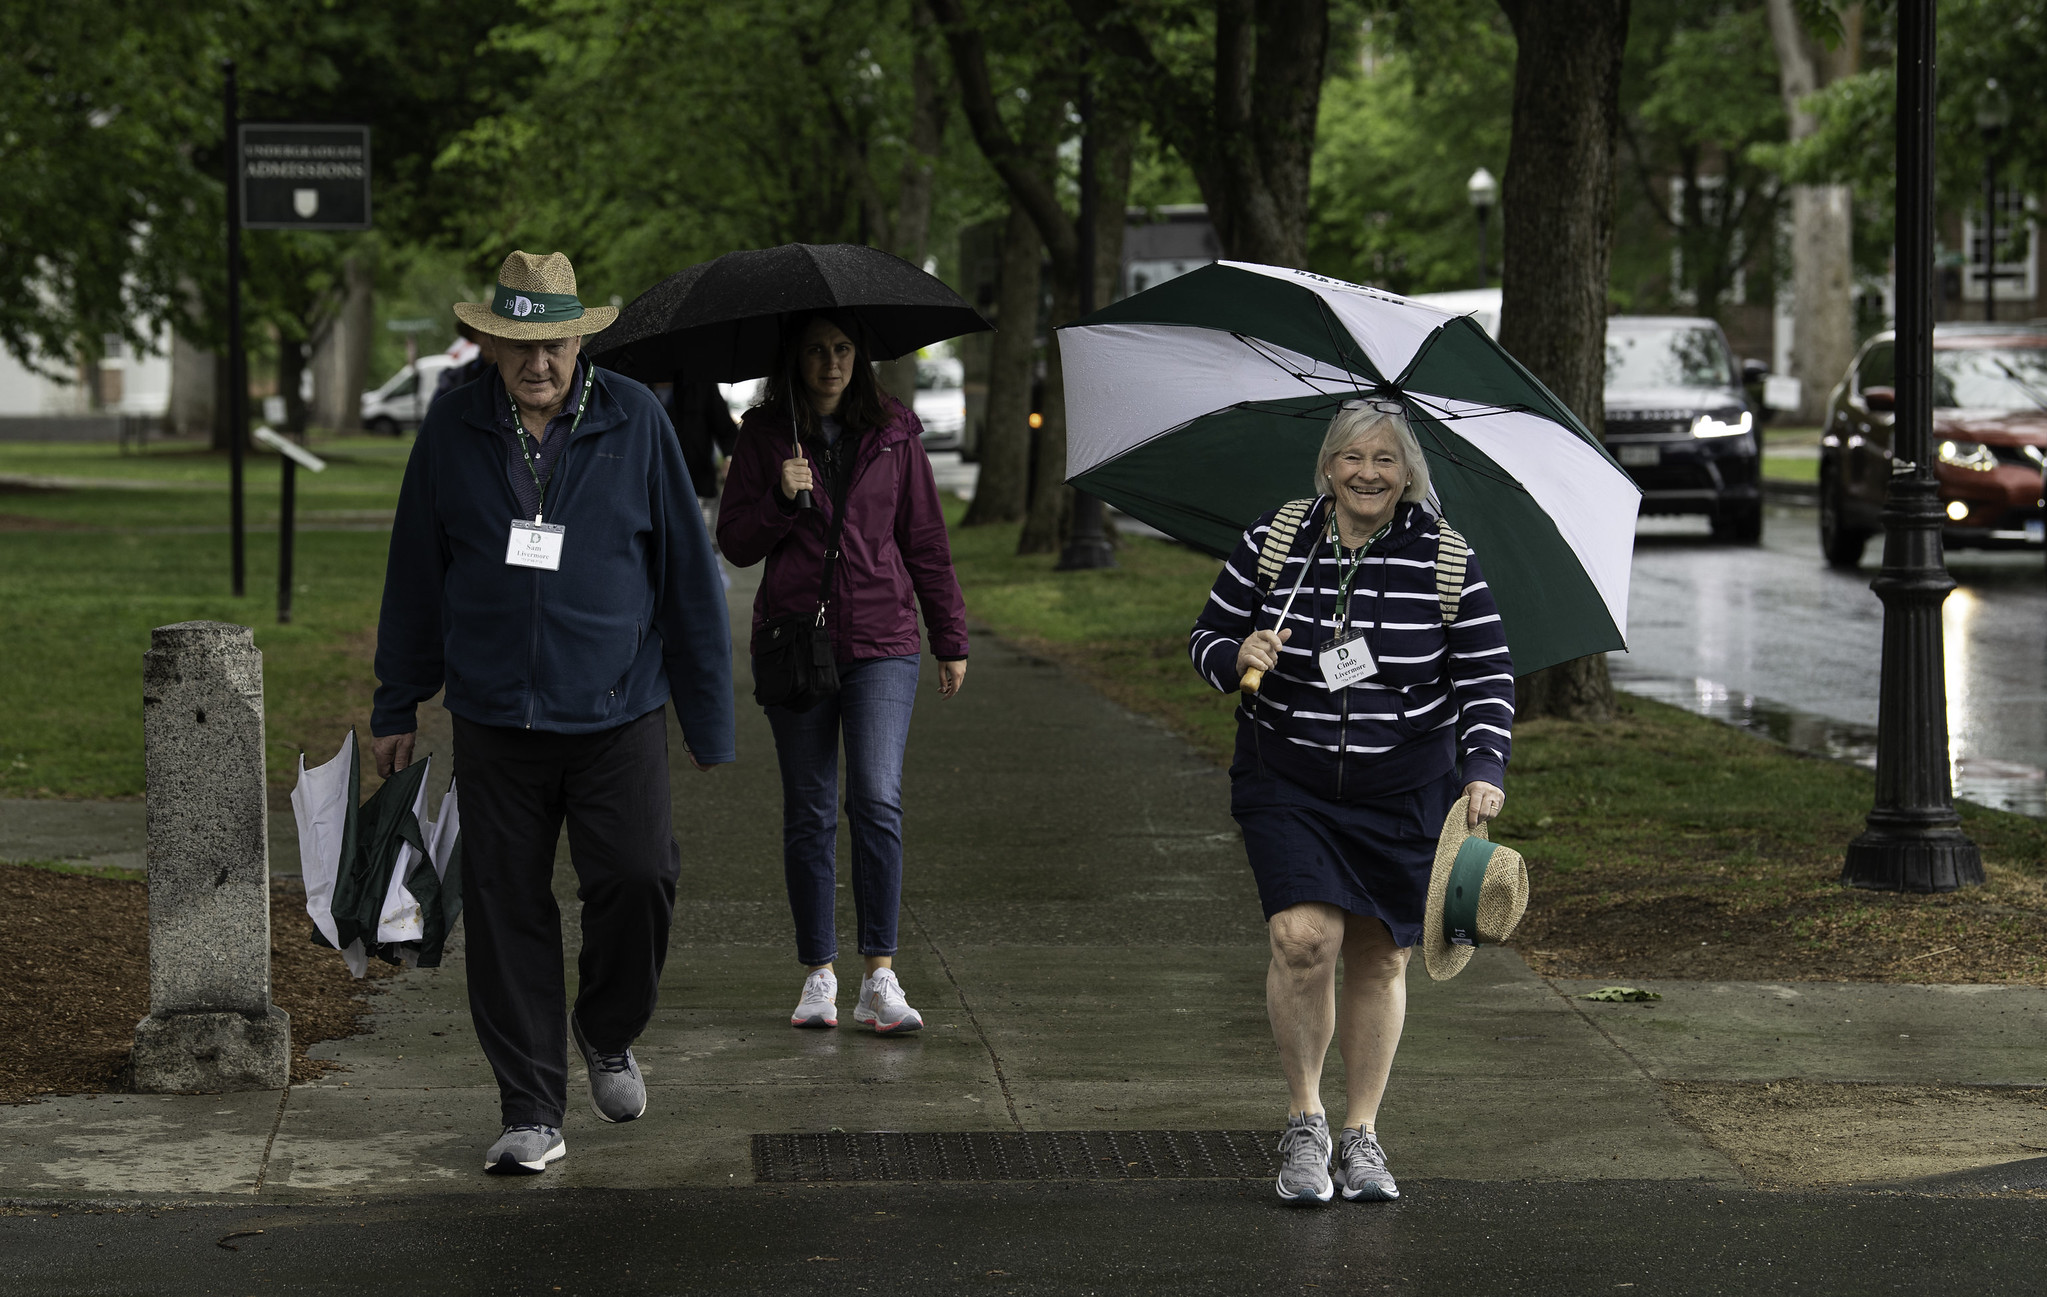 Alumni walking in the rain with umbrellas